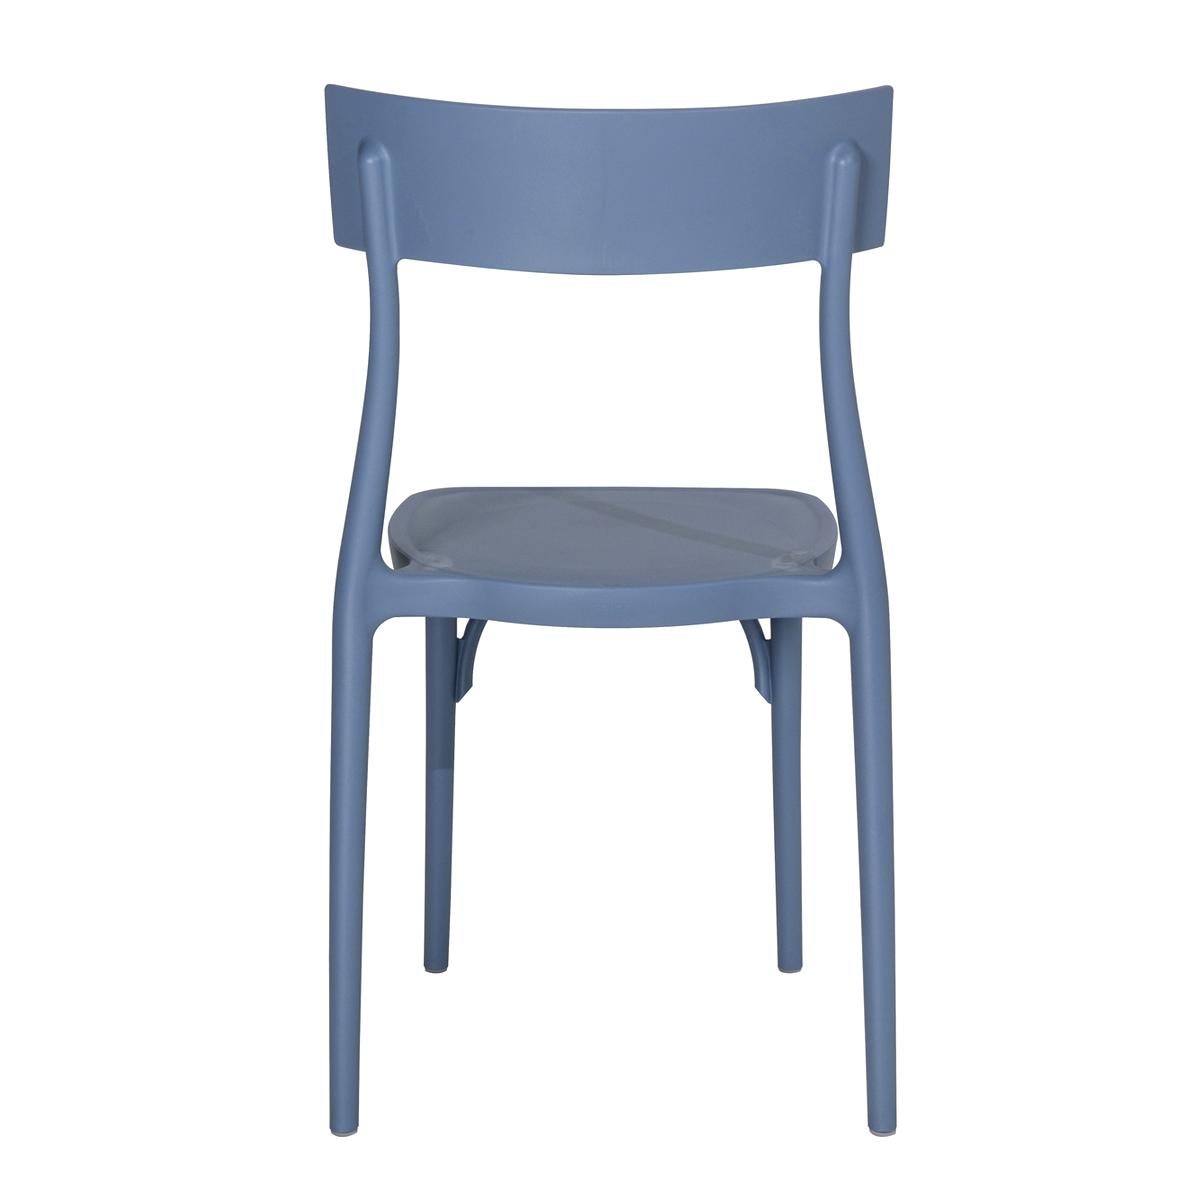 Italian In Stock in Los Angeles, Milani, Steel Blue Polypropylene Dining Chair